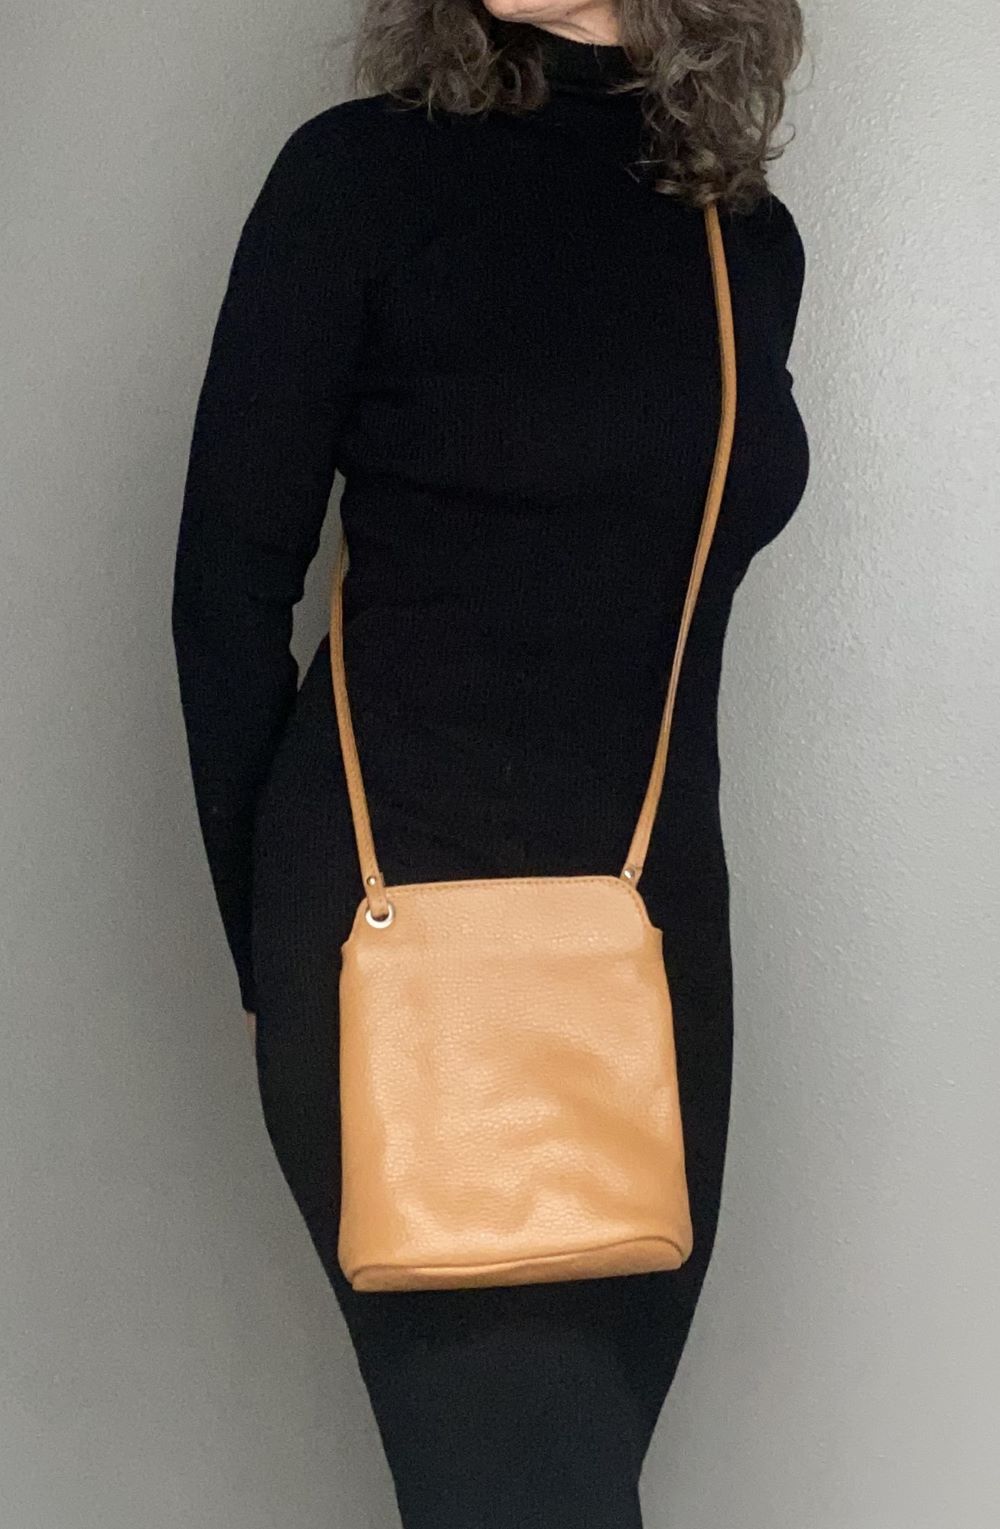 LaGaksta Fina - Casual Italian Leather Small Zip Crossbody Bags for Women Cell Phone Travel Passport Bag Wallet Purses